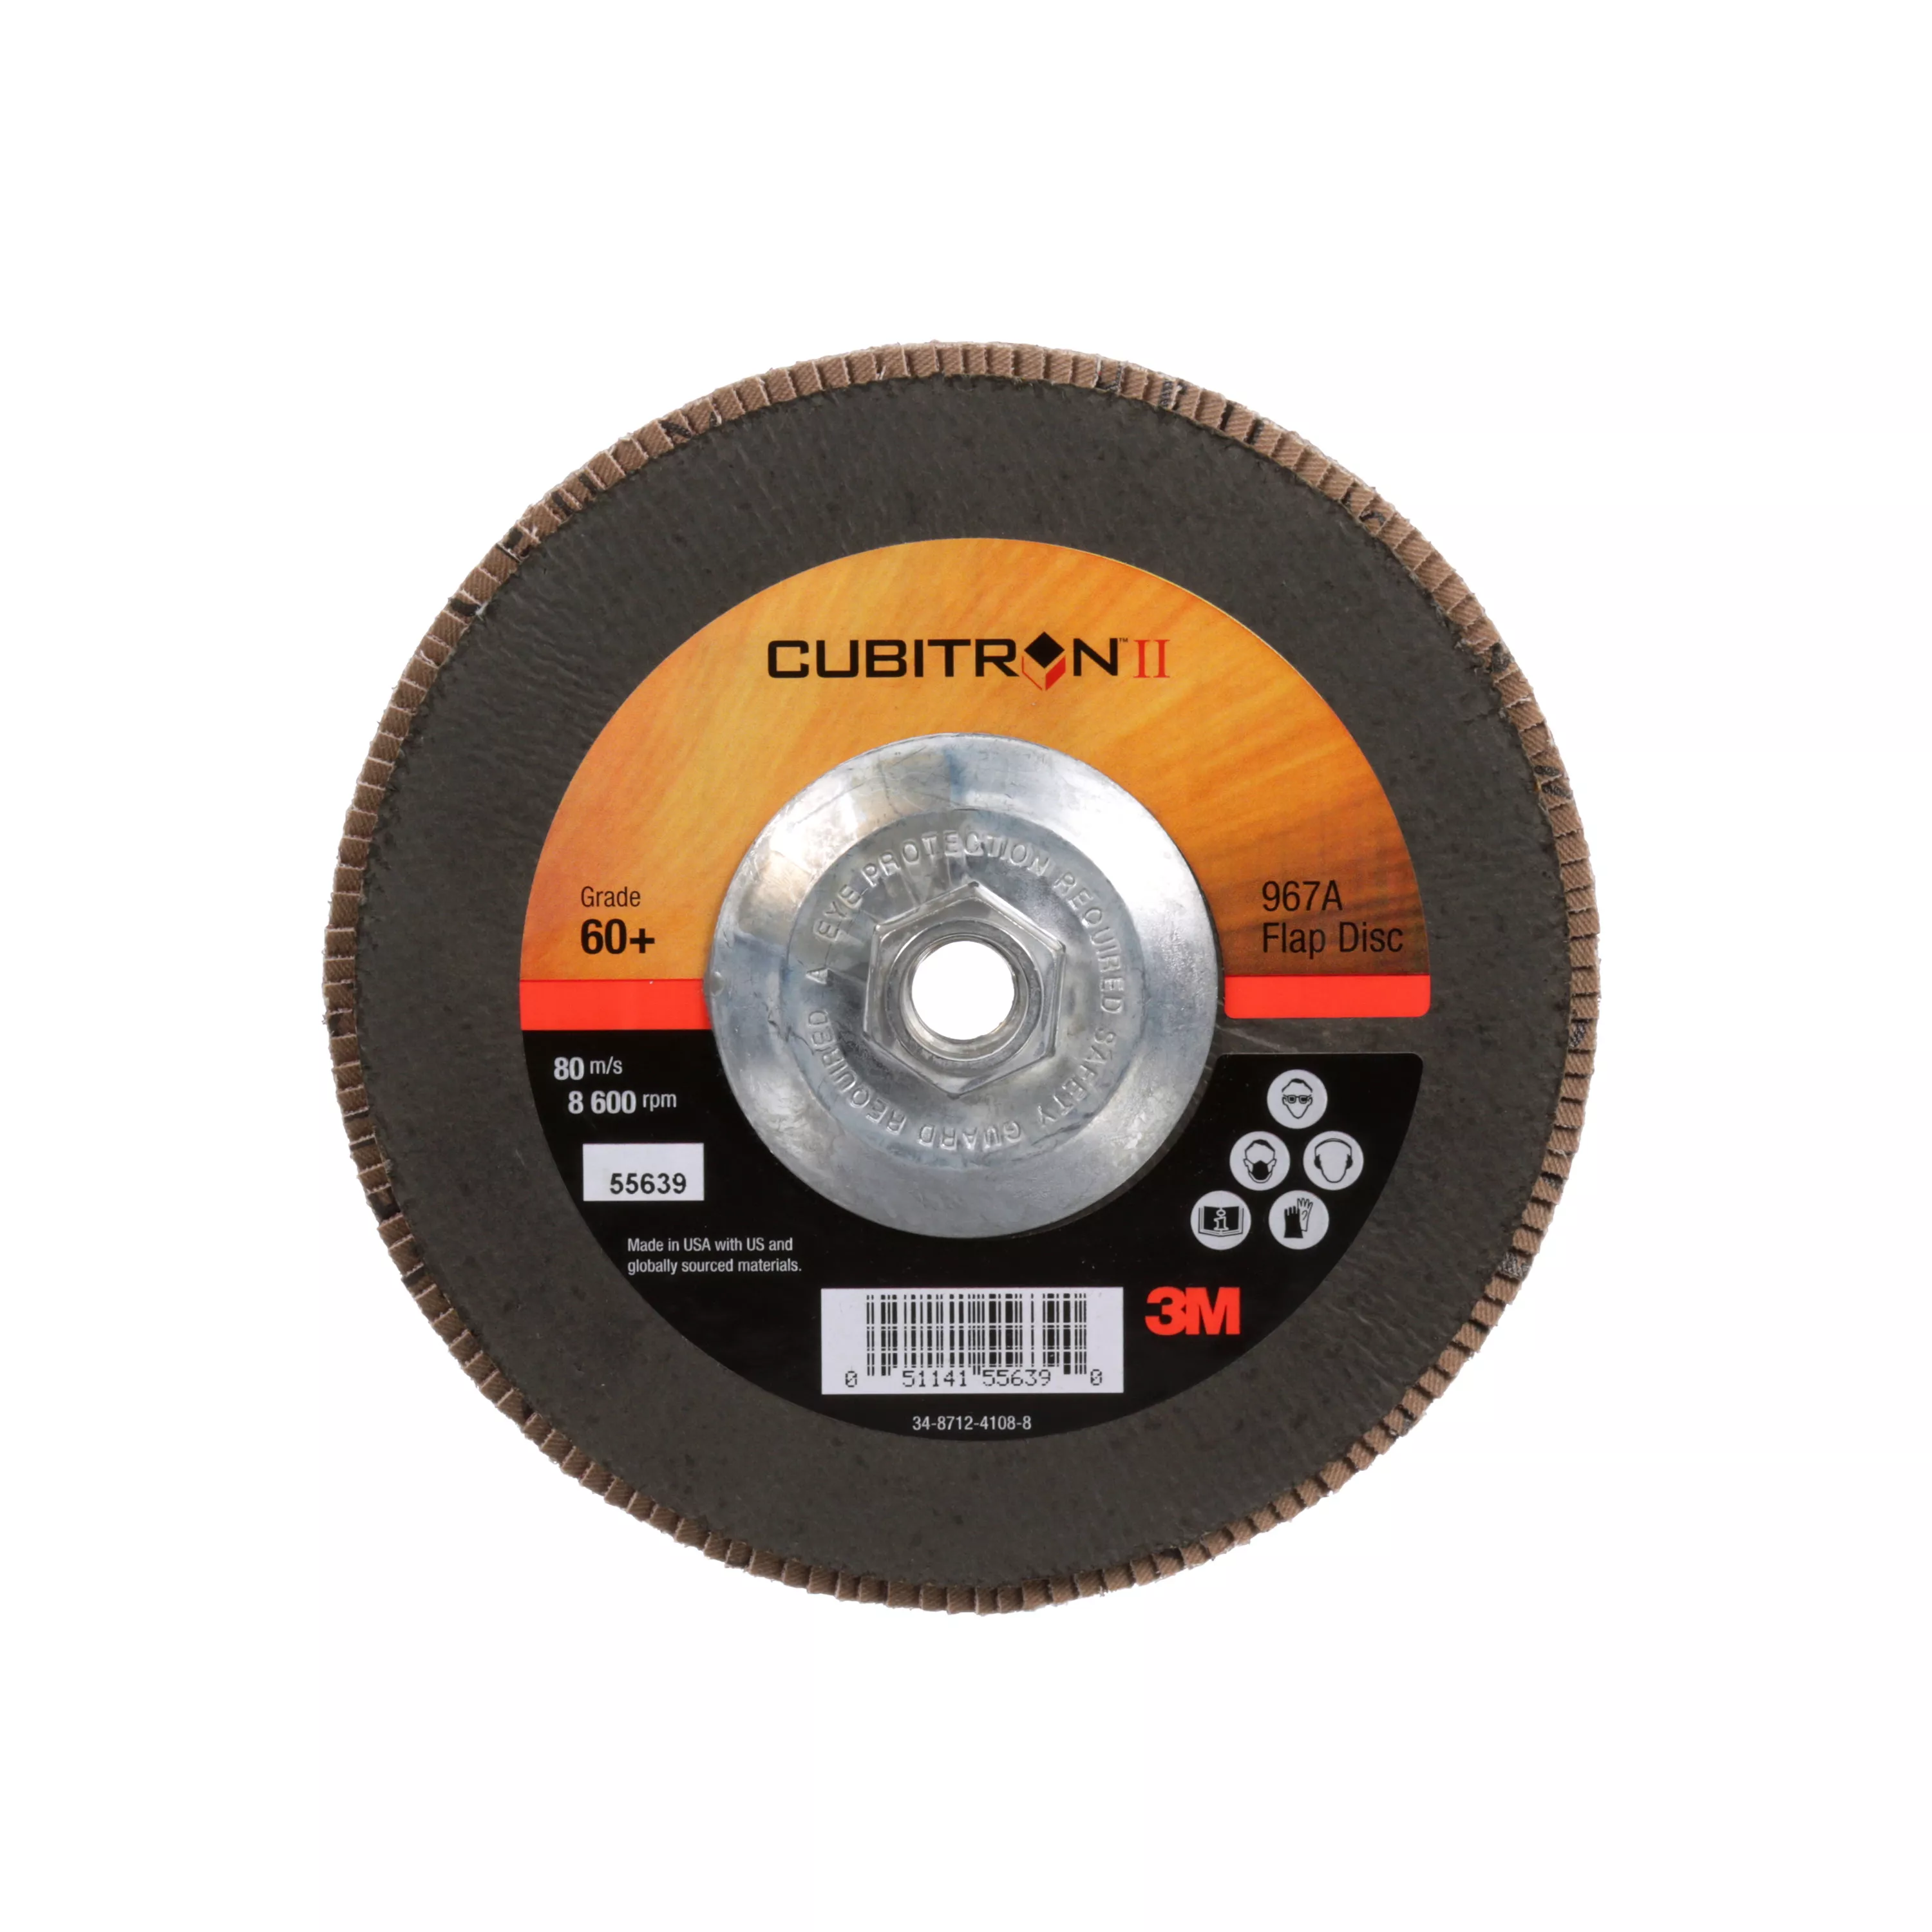 SKU 7010363304 | 3M™ Cubitron™ II Flap Disc 967A